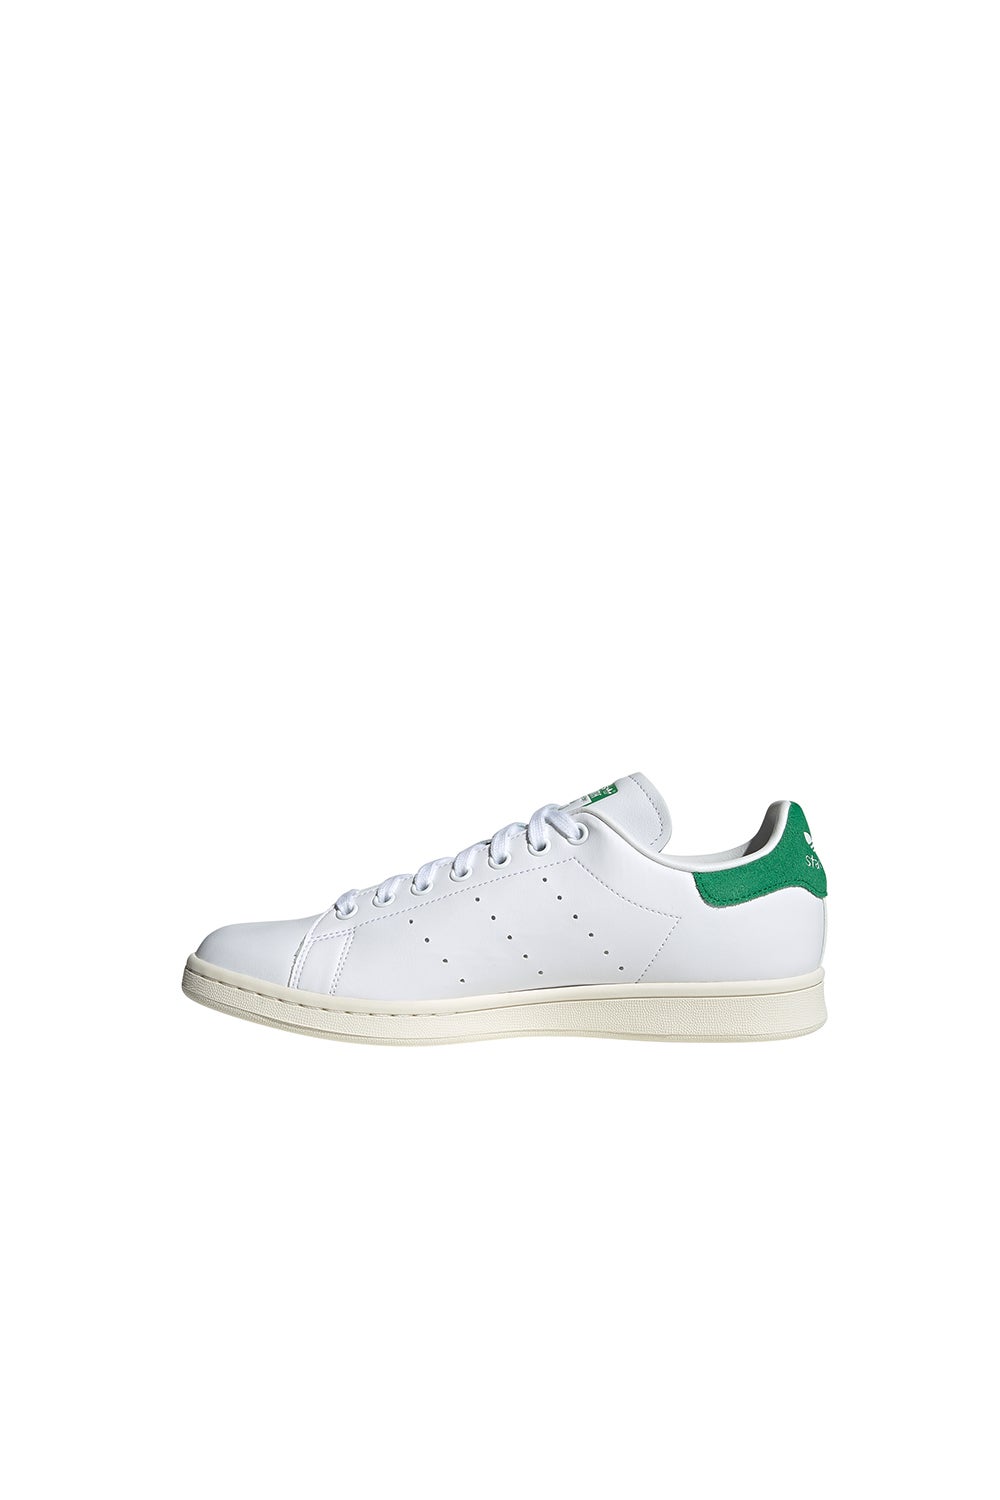 adidas Stan Smith Shoes White/Green | Karen Walker ٥٠ فاكهه